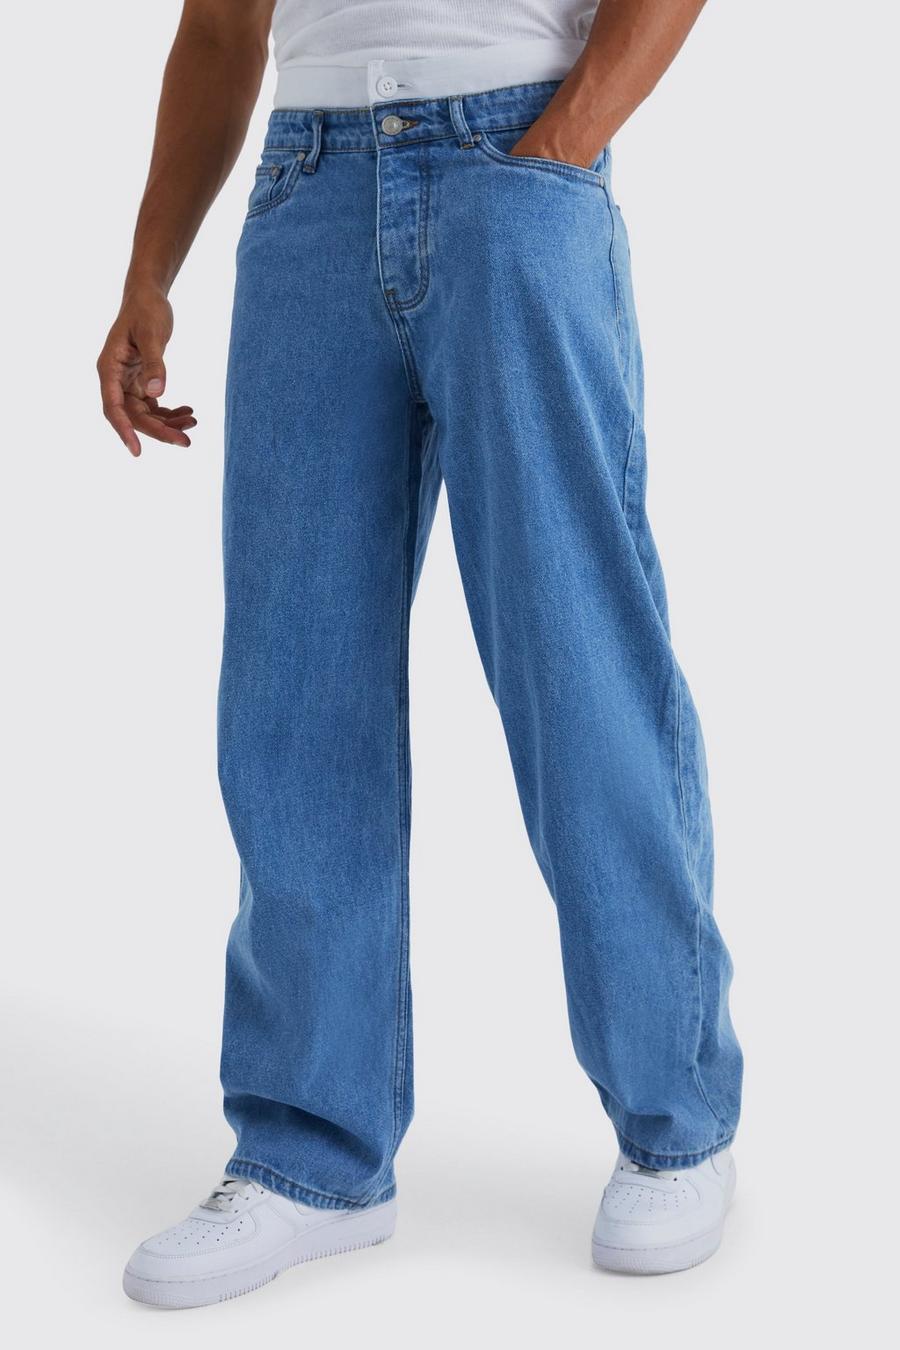 Lockere Jeans mit doppeltem Bund, Light blue bleu